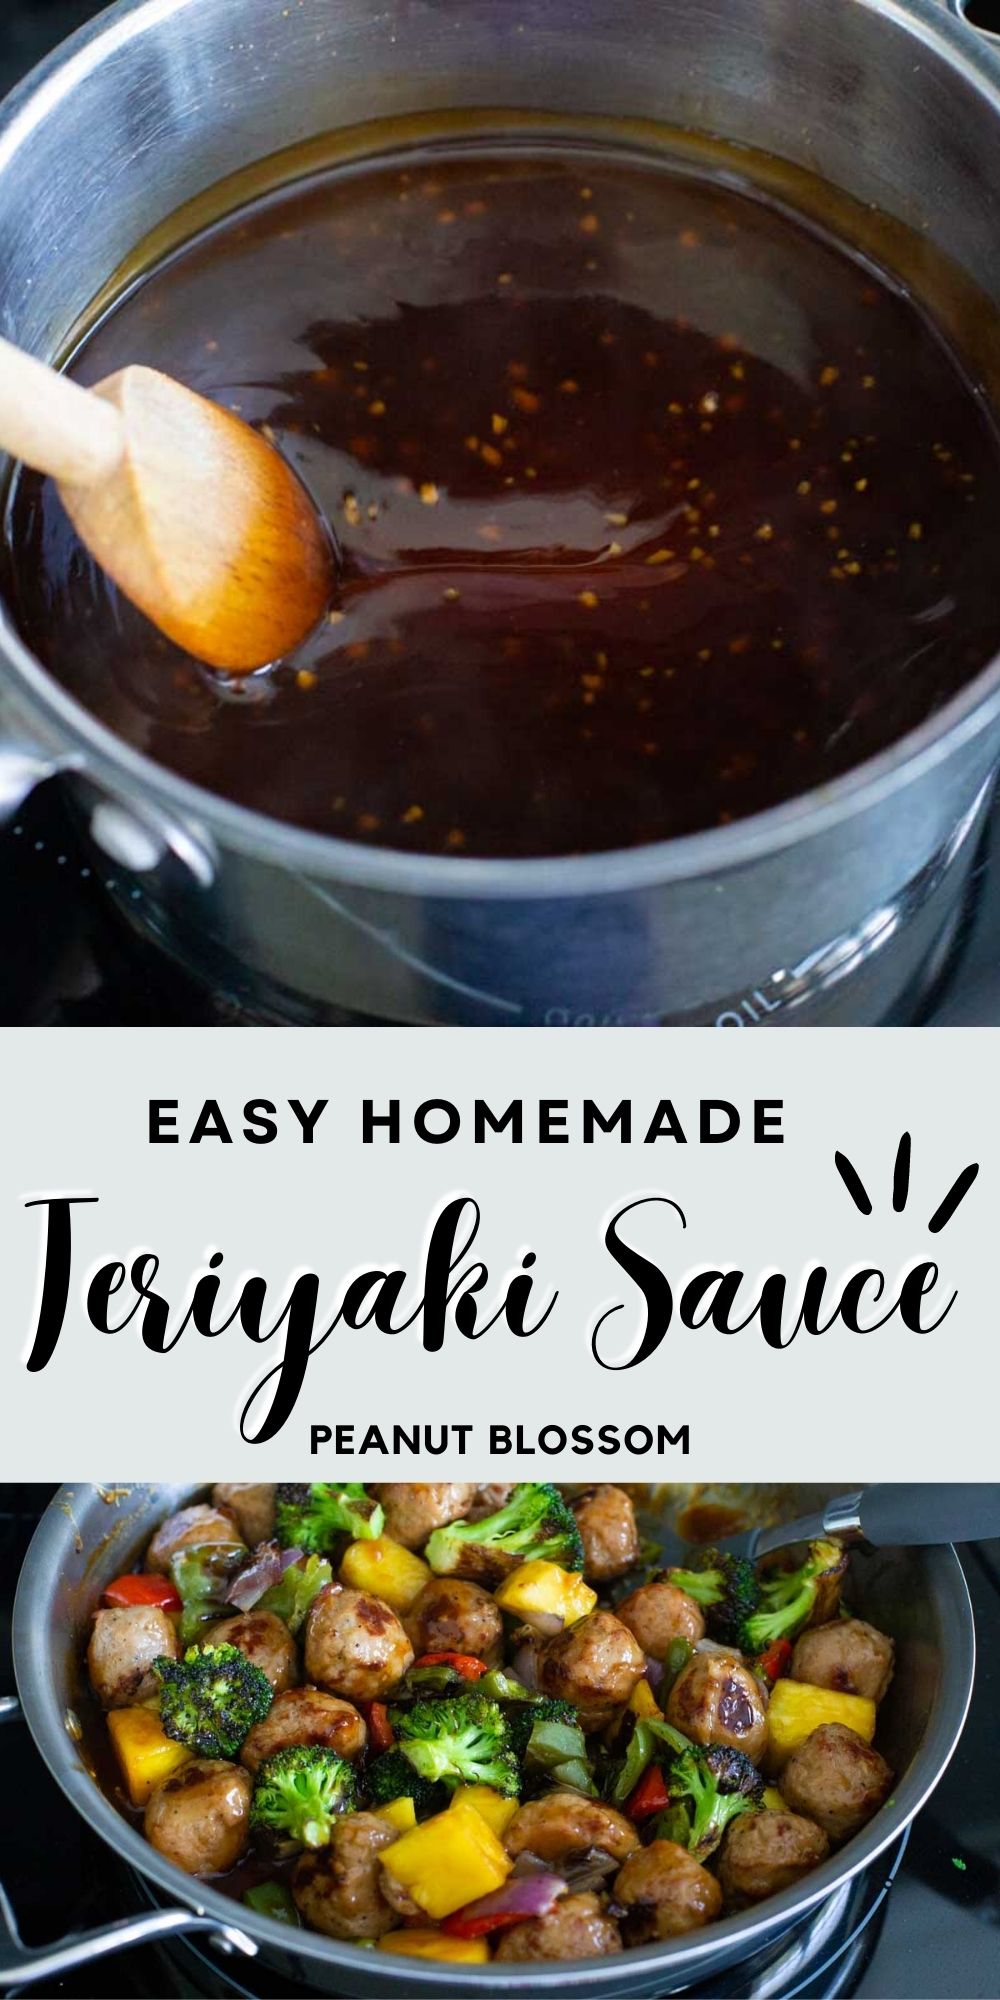 The teriyaki sauce in the saucepan on top, skillet meatballs on the bottom. 